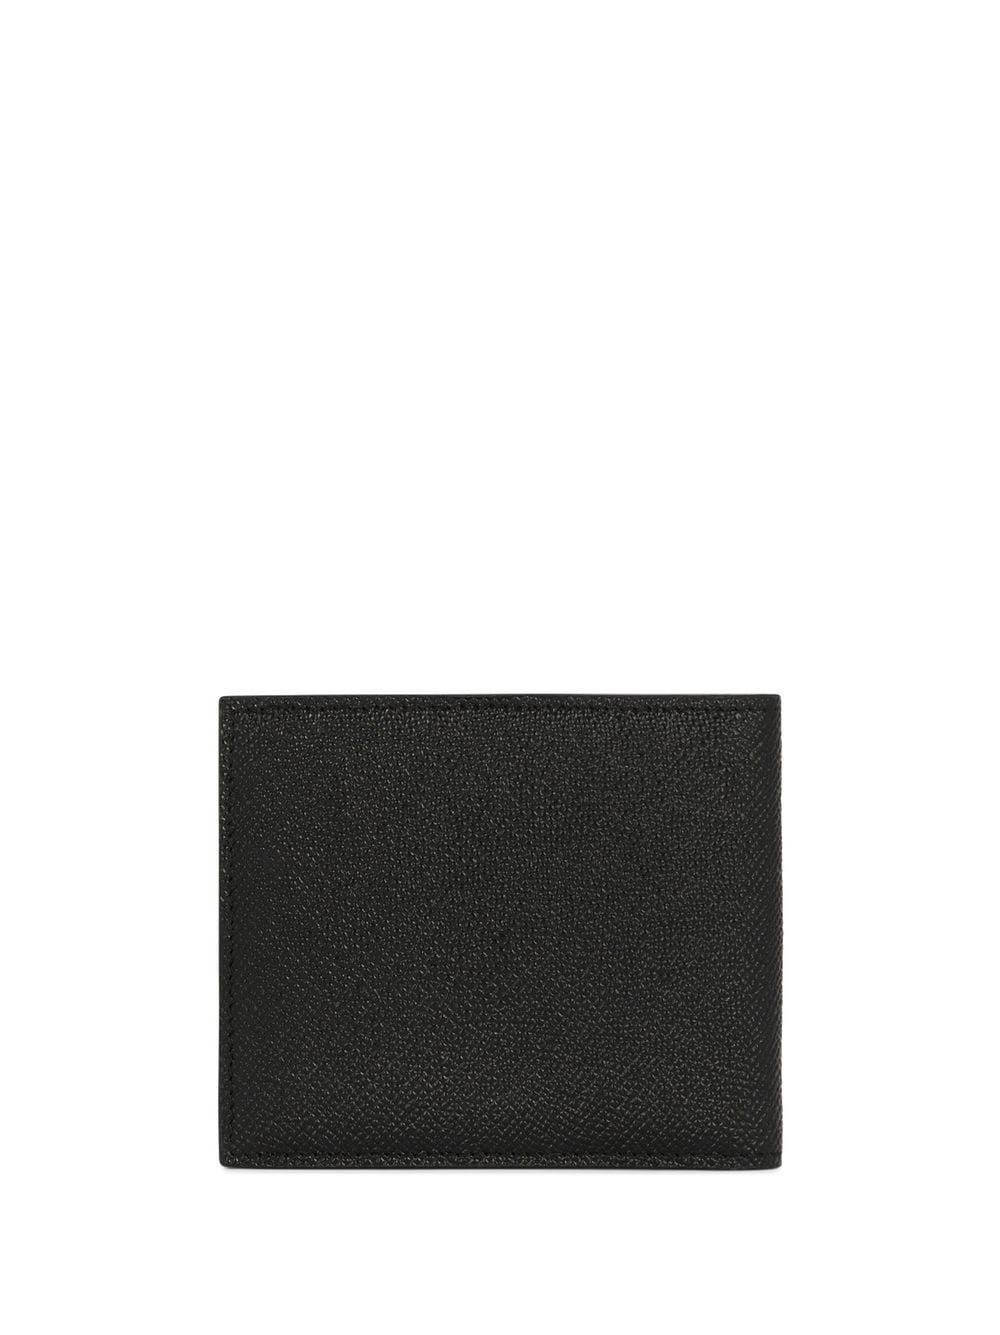 Logo-tag leather bifold wallet<BR/><BR/><BR/>